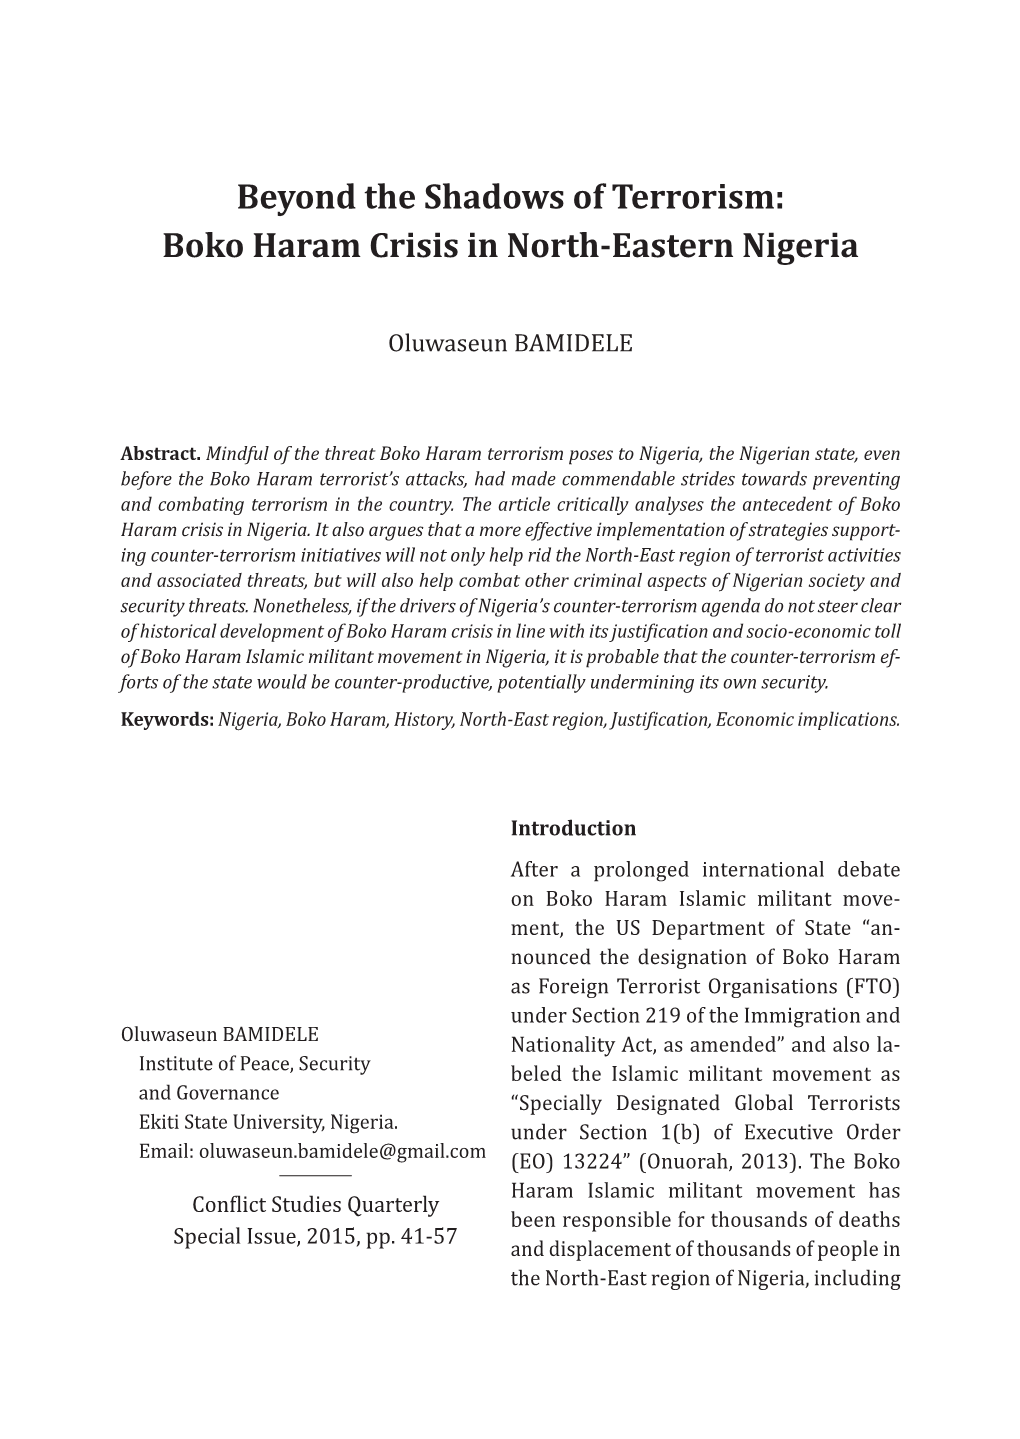 Boko Haram Crisis in North-Eastern Nigeria